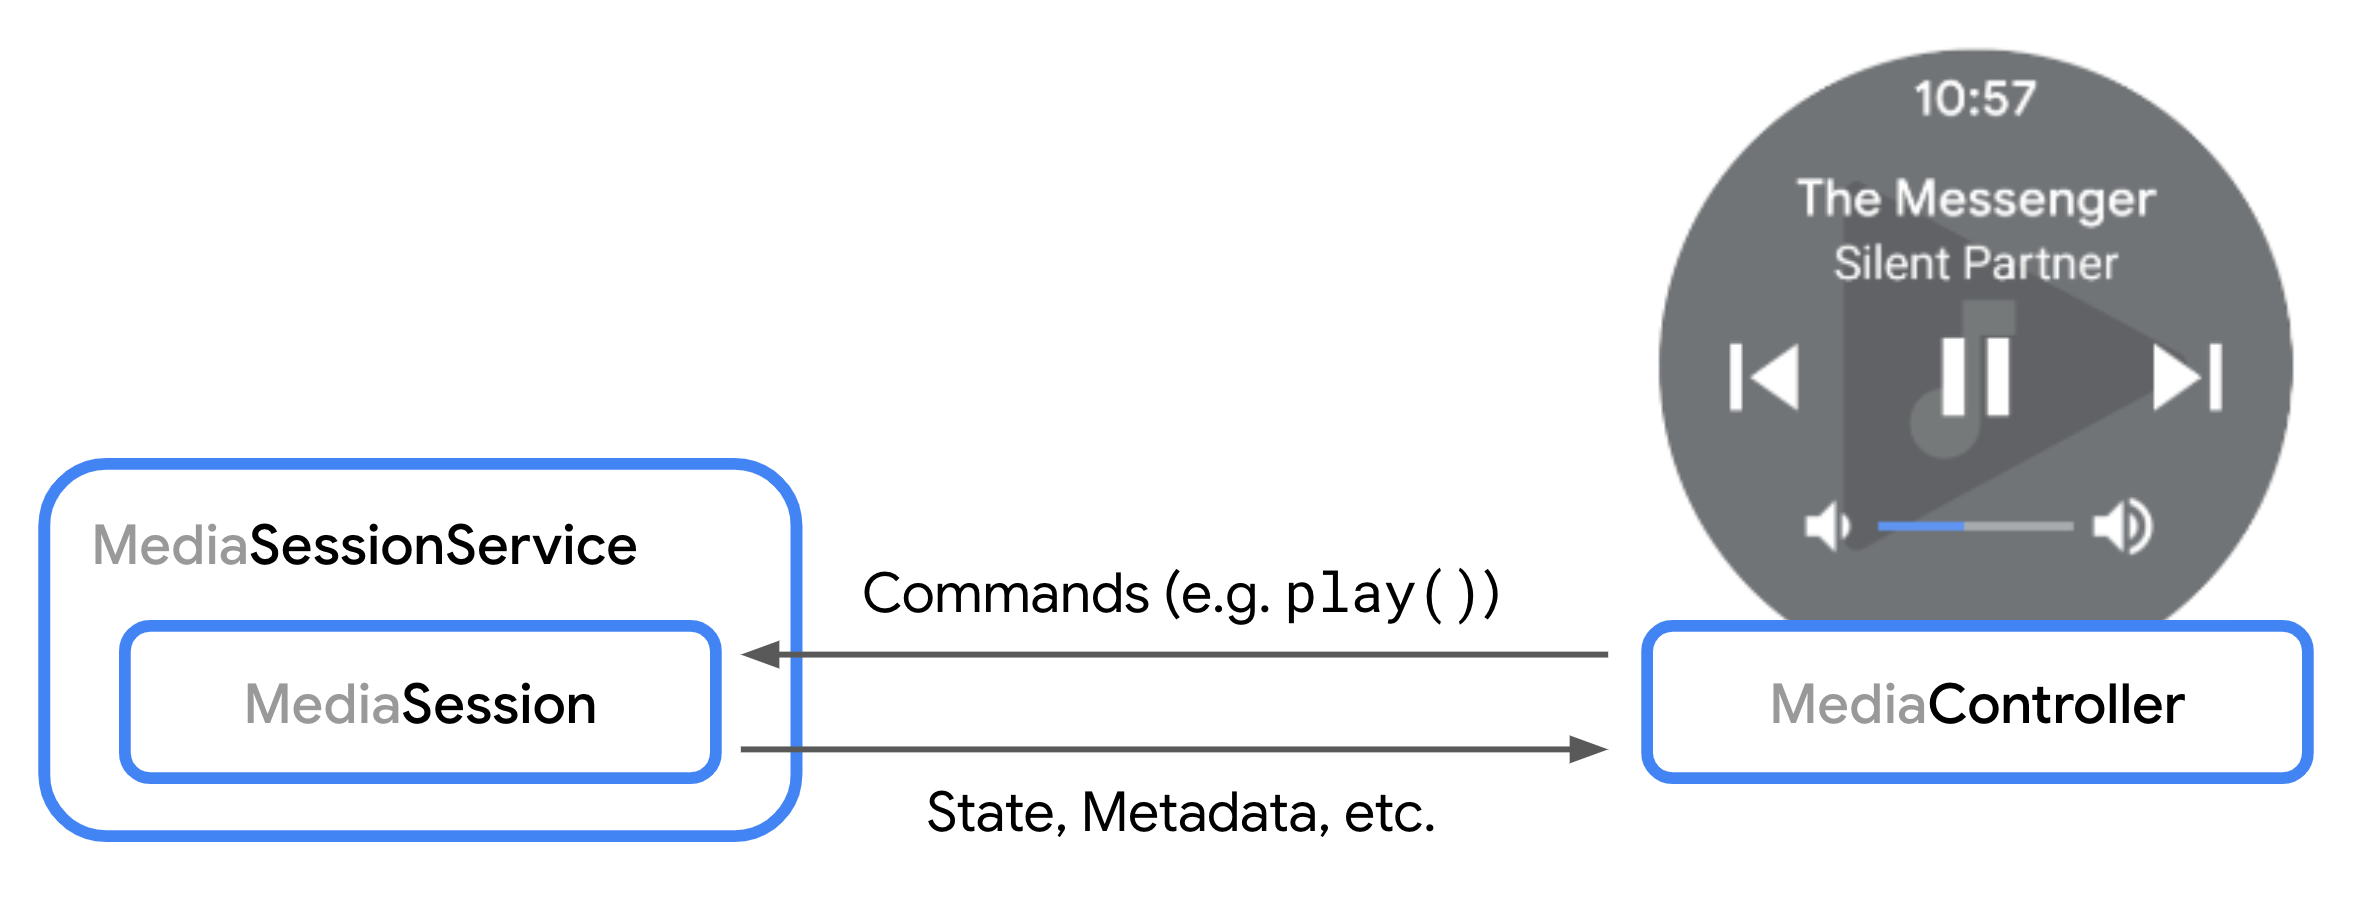 演示 MediaSession 和 MediaController 之间的交互的图表。